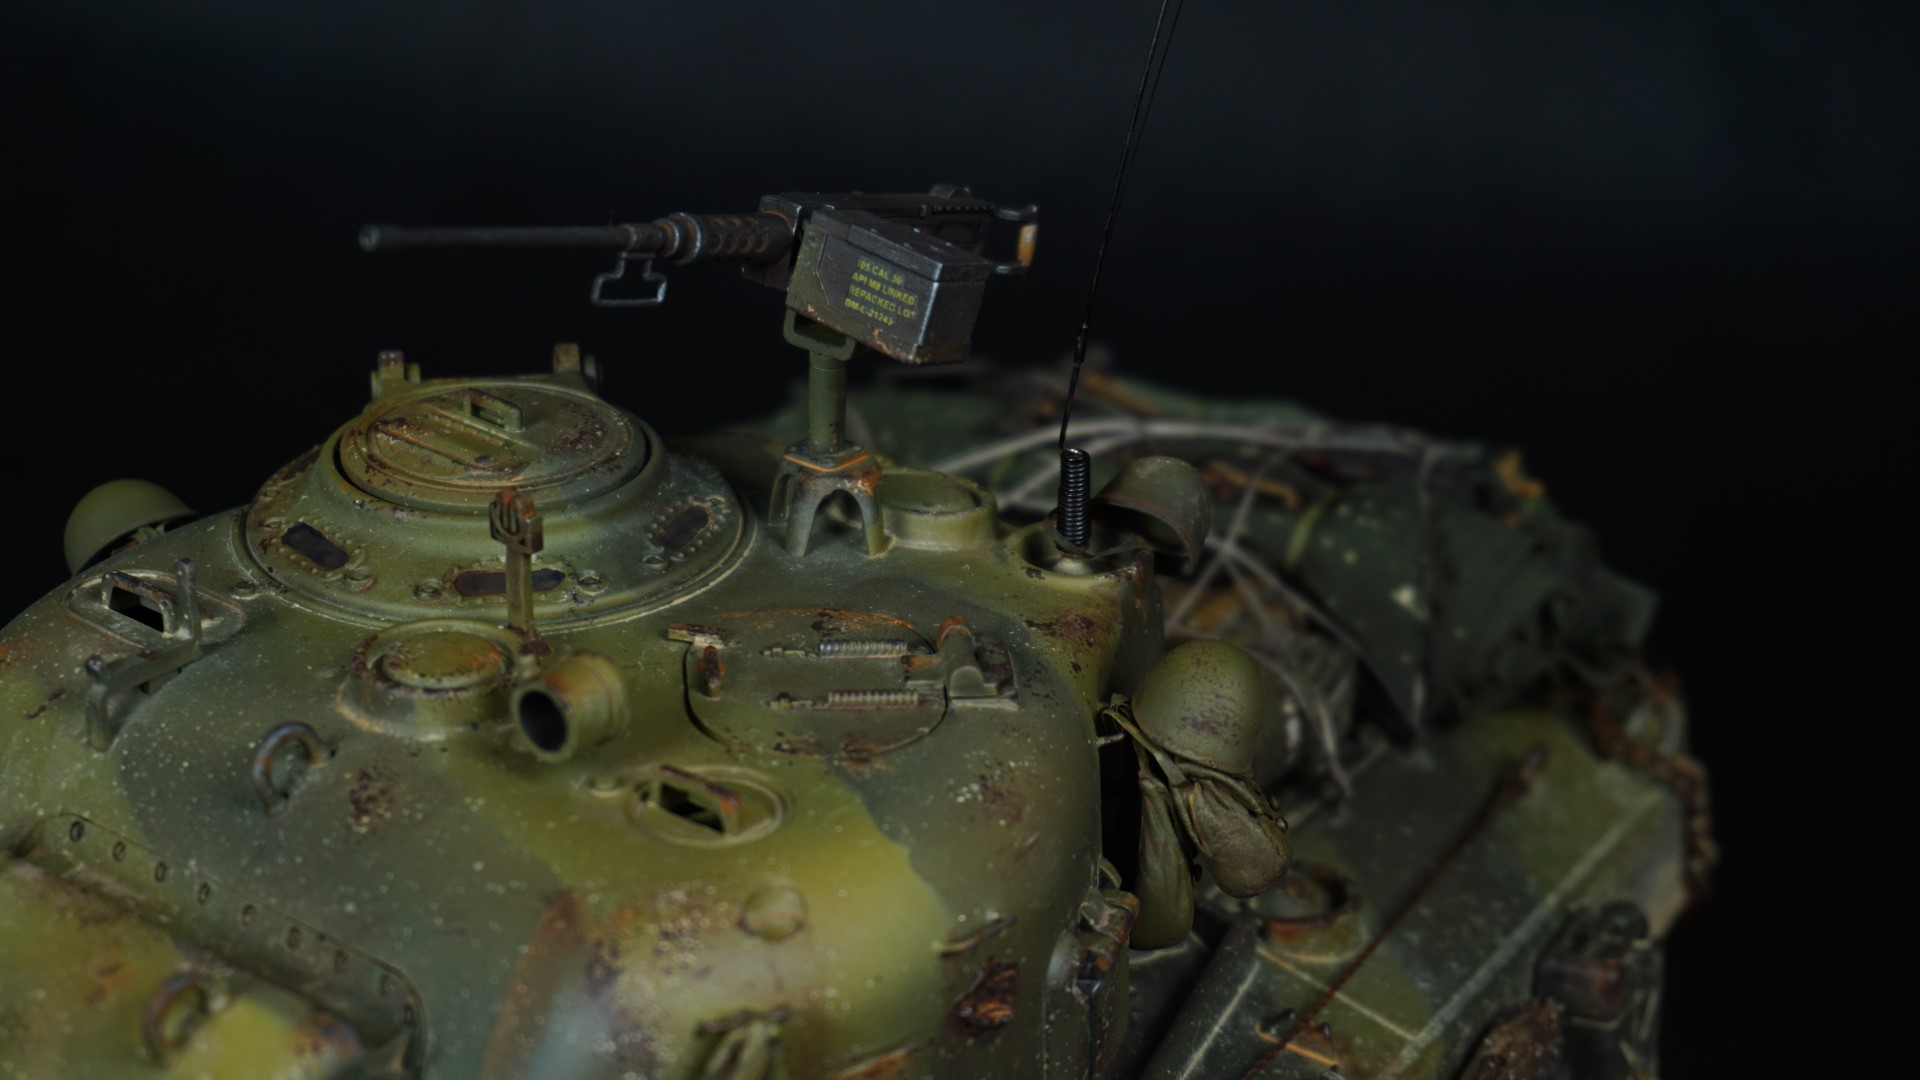 Sherman Fury World War II U.S.A. MEDIUM TANK Customized Paint, Build and Weathering Based on HENG-LONG HL-3898 Pro M4A3 Sherman Metal RC Tank